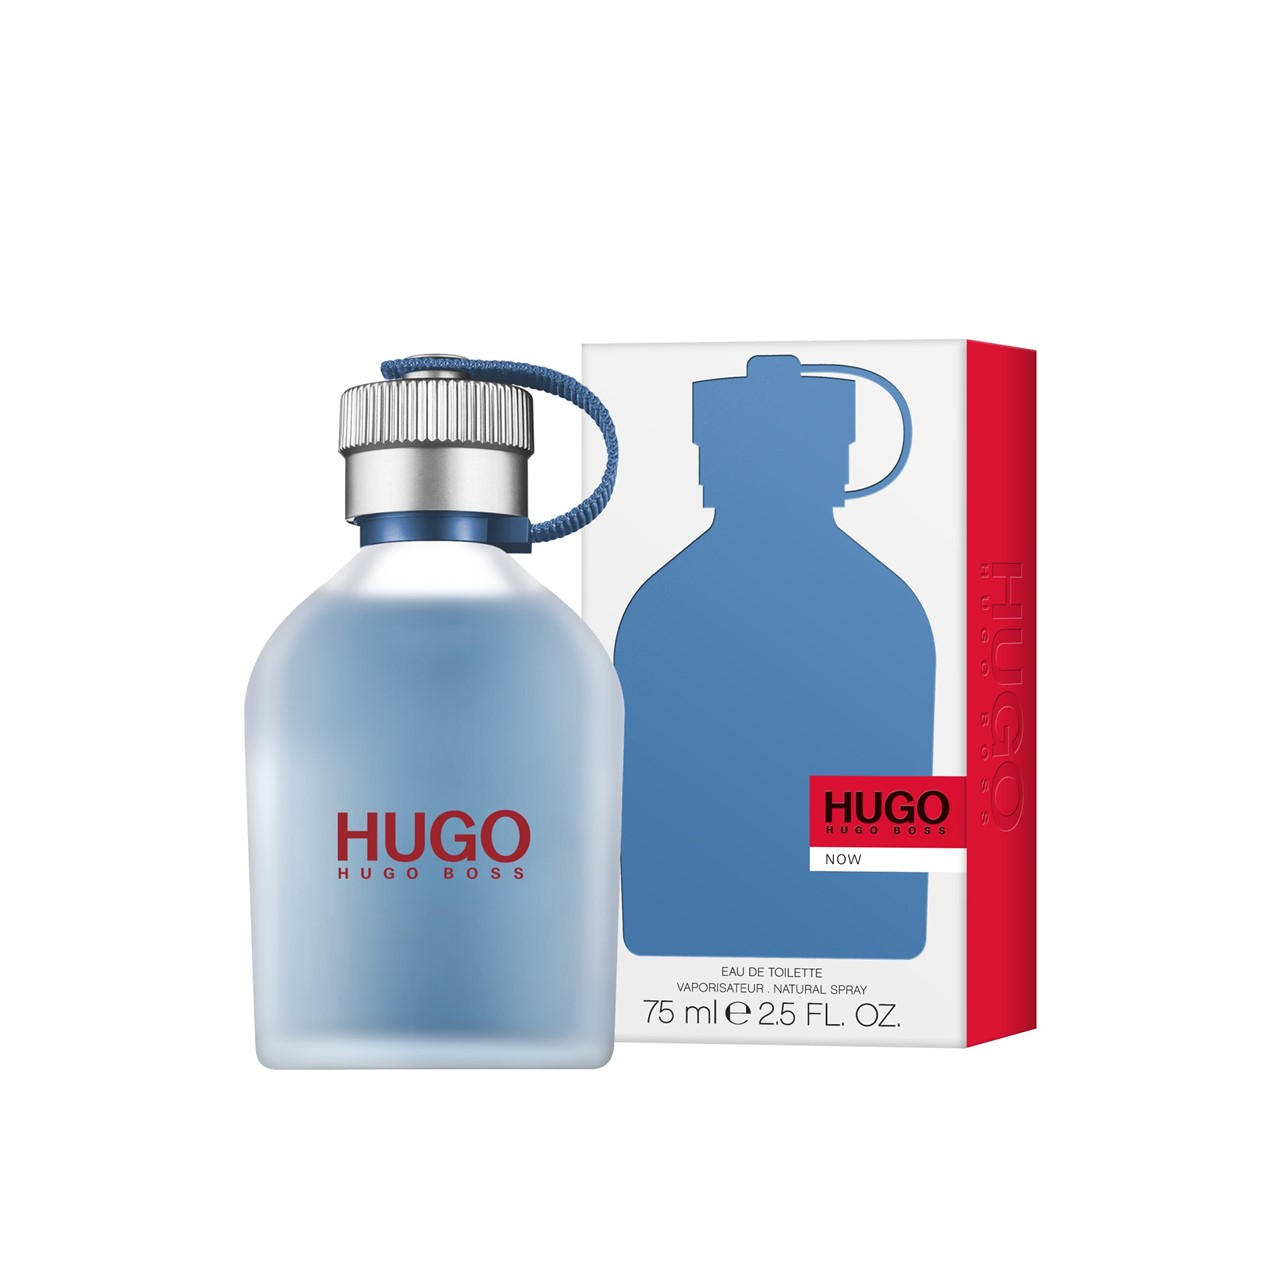 Hugo Boss Hugo Now Eau de Toilette 75ml